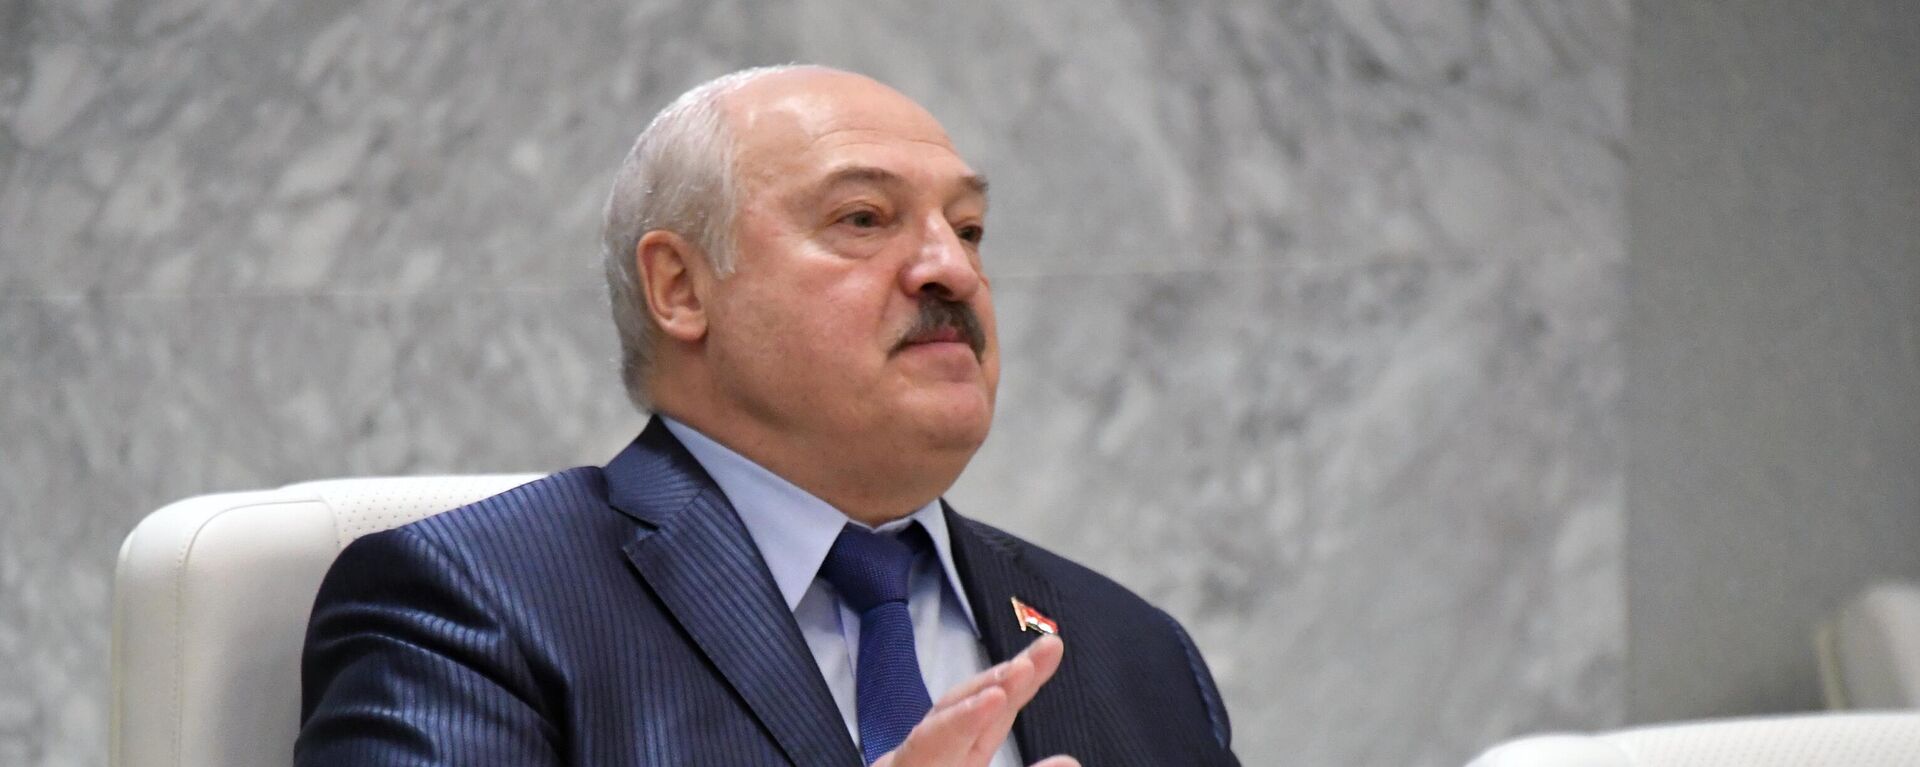 O presidente belarusso, Aleksandr Lukashenko, gesticula durante evento em Vladivostok, na Rússia, 13 de abril de 2022 - Sputnik Brasil, 1920, 03.12.2022